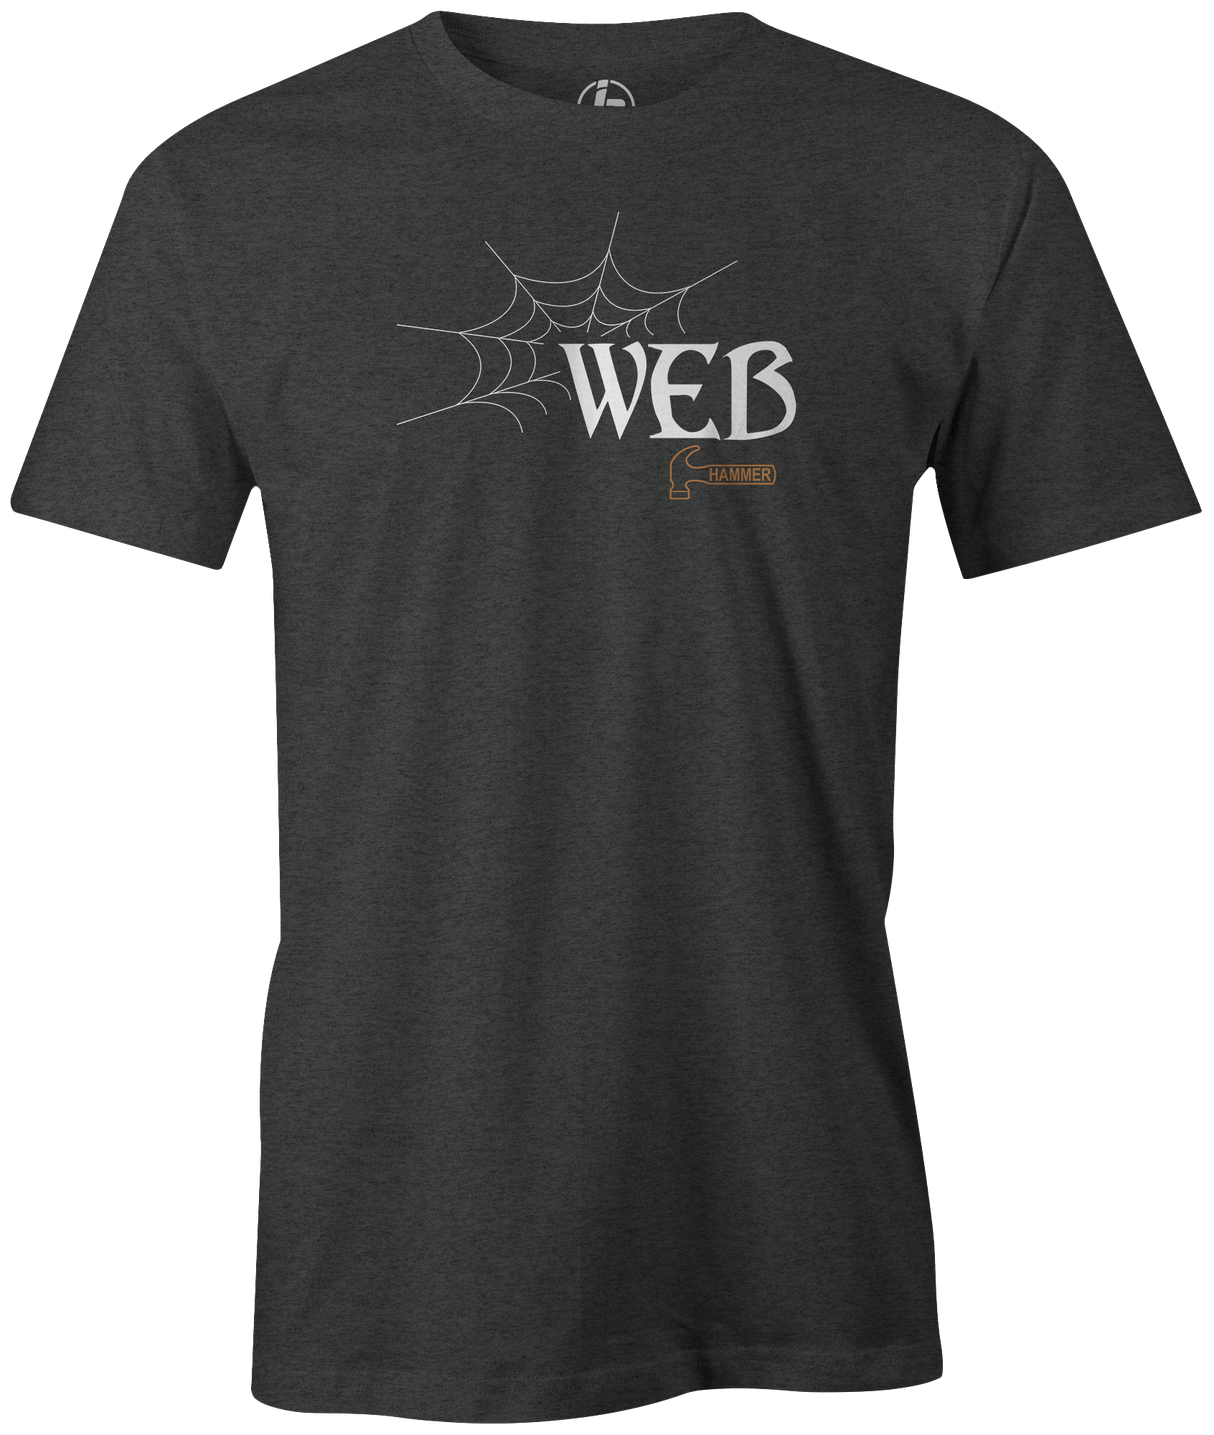 Hammer Web Men's T-shirt, Purple, Bowling, Bowling Ball, tshirt, tee, tee-shirt, tee shirt, web tour, black widow, bill o'neil, shannon o'keefe